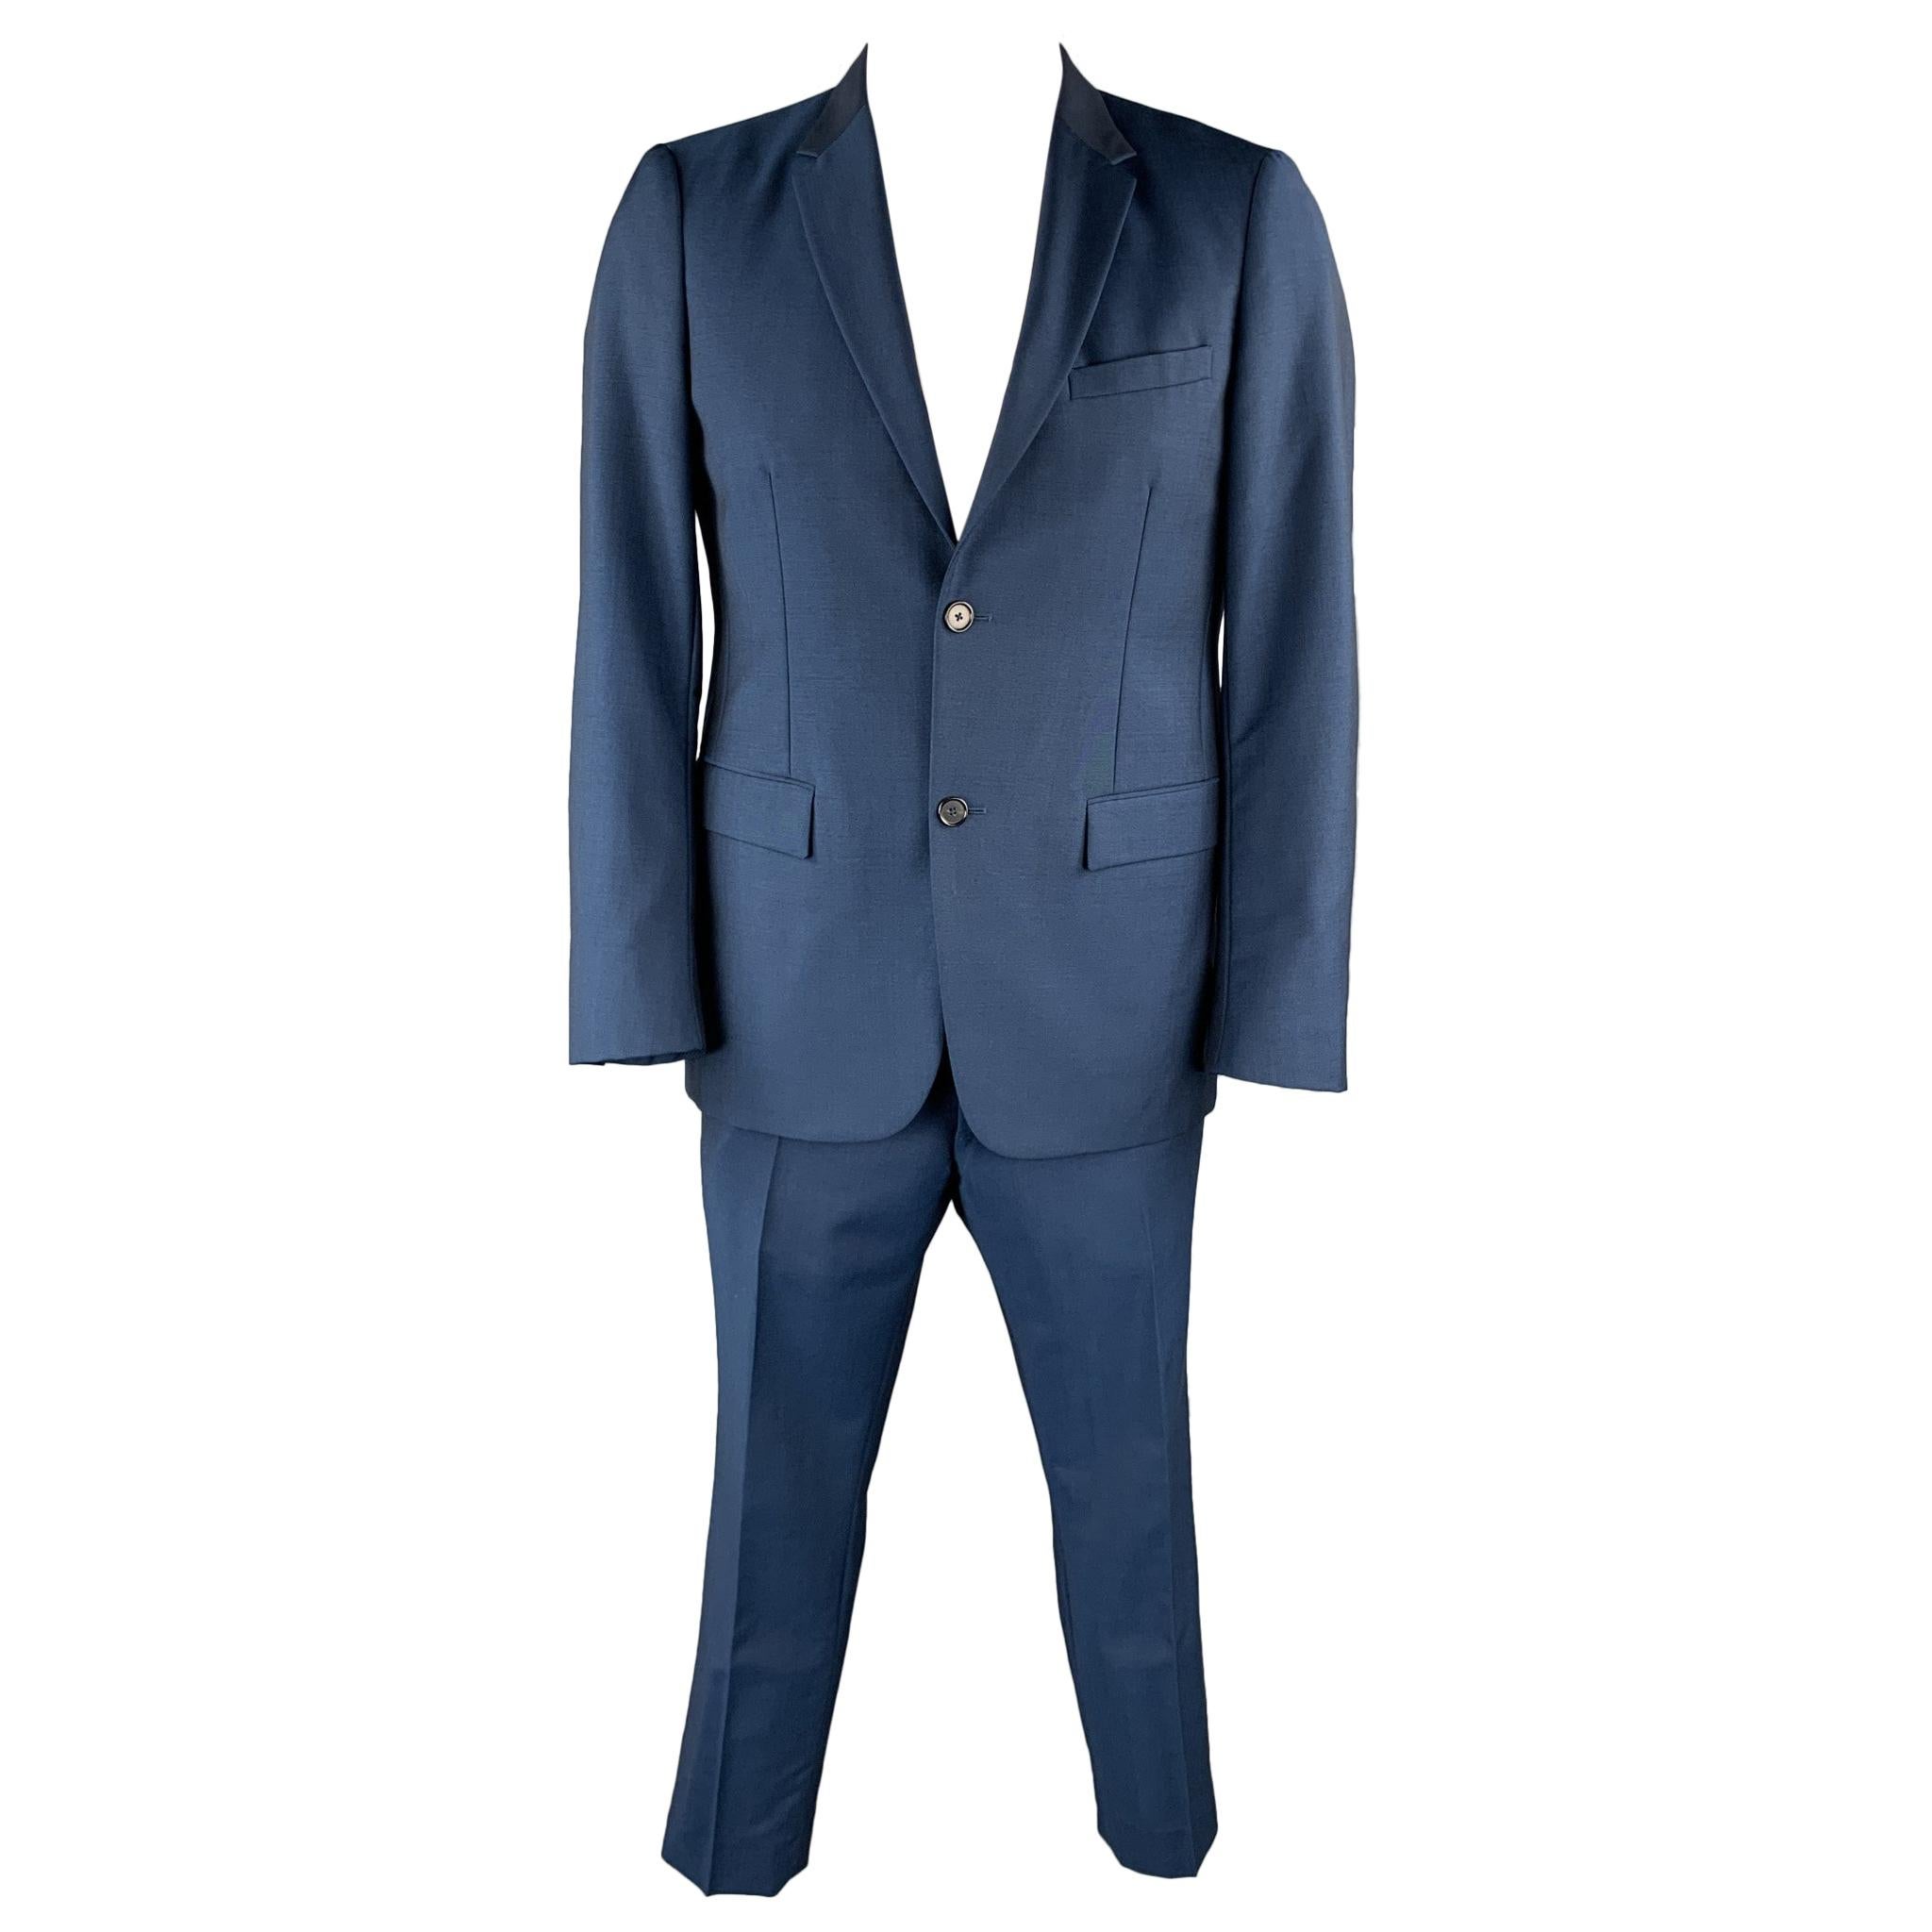 JIL SANDER Size 42 Navy Wool / Mohair Notch Lapel Suit